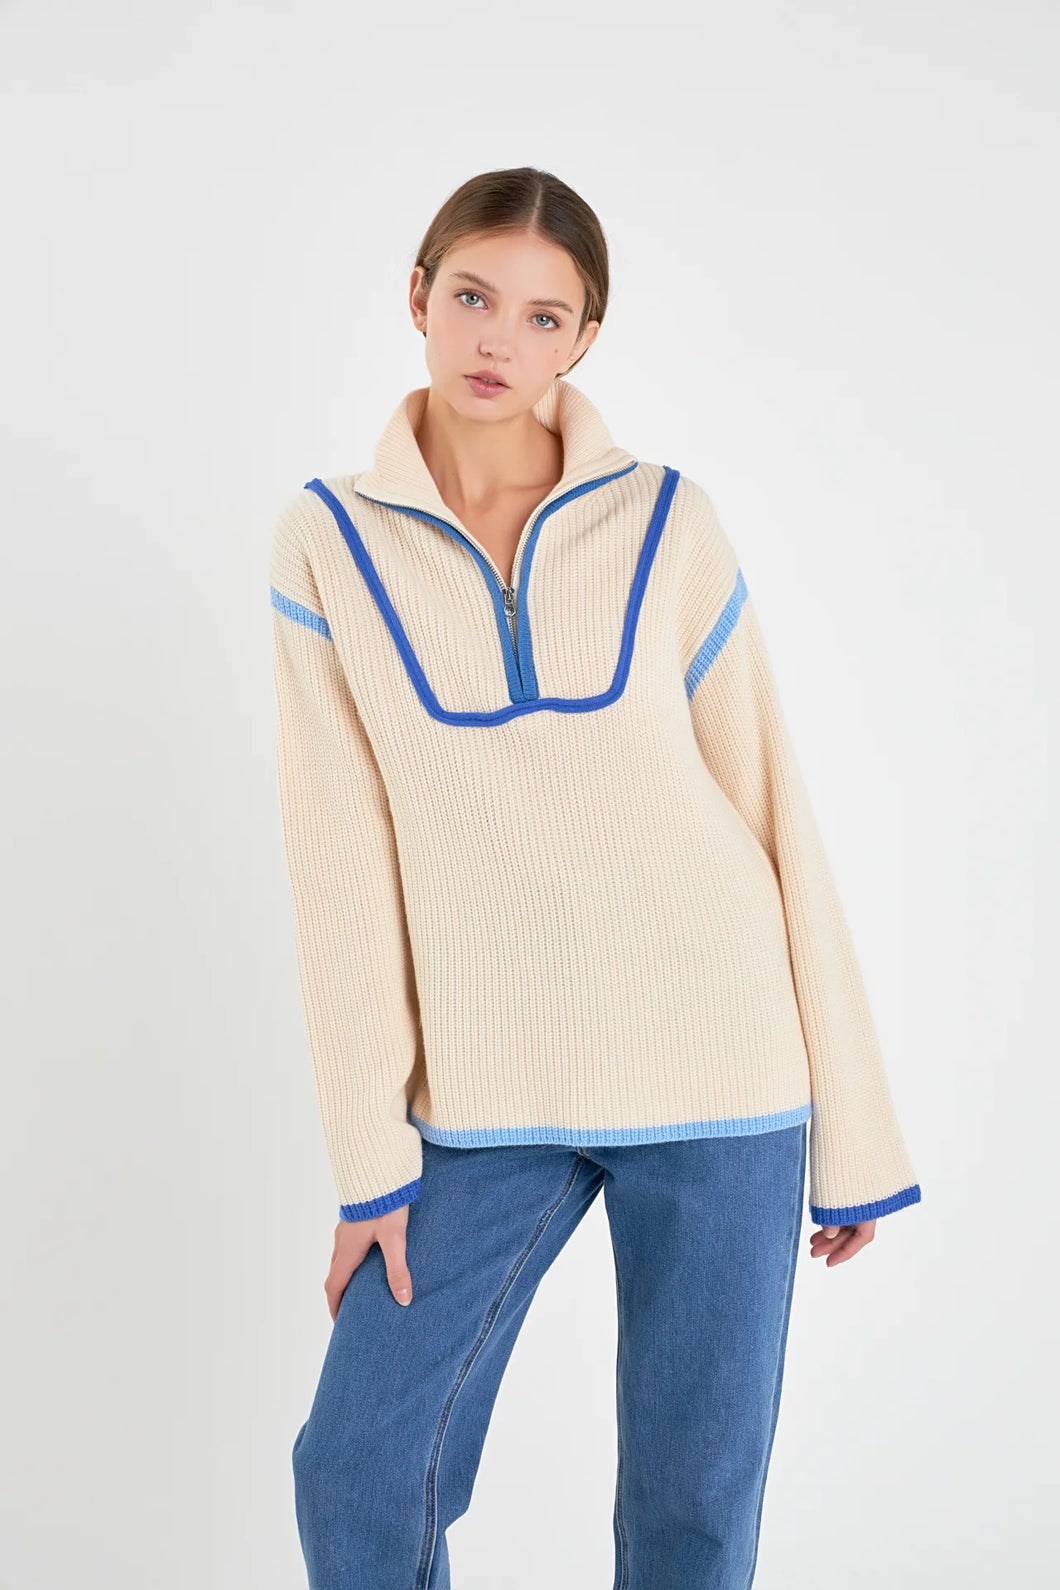 Contrast Piping 1/4 Zip Sweater - Beige Multi or Blue Multi